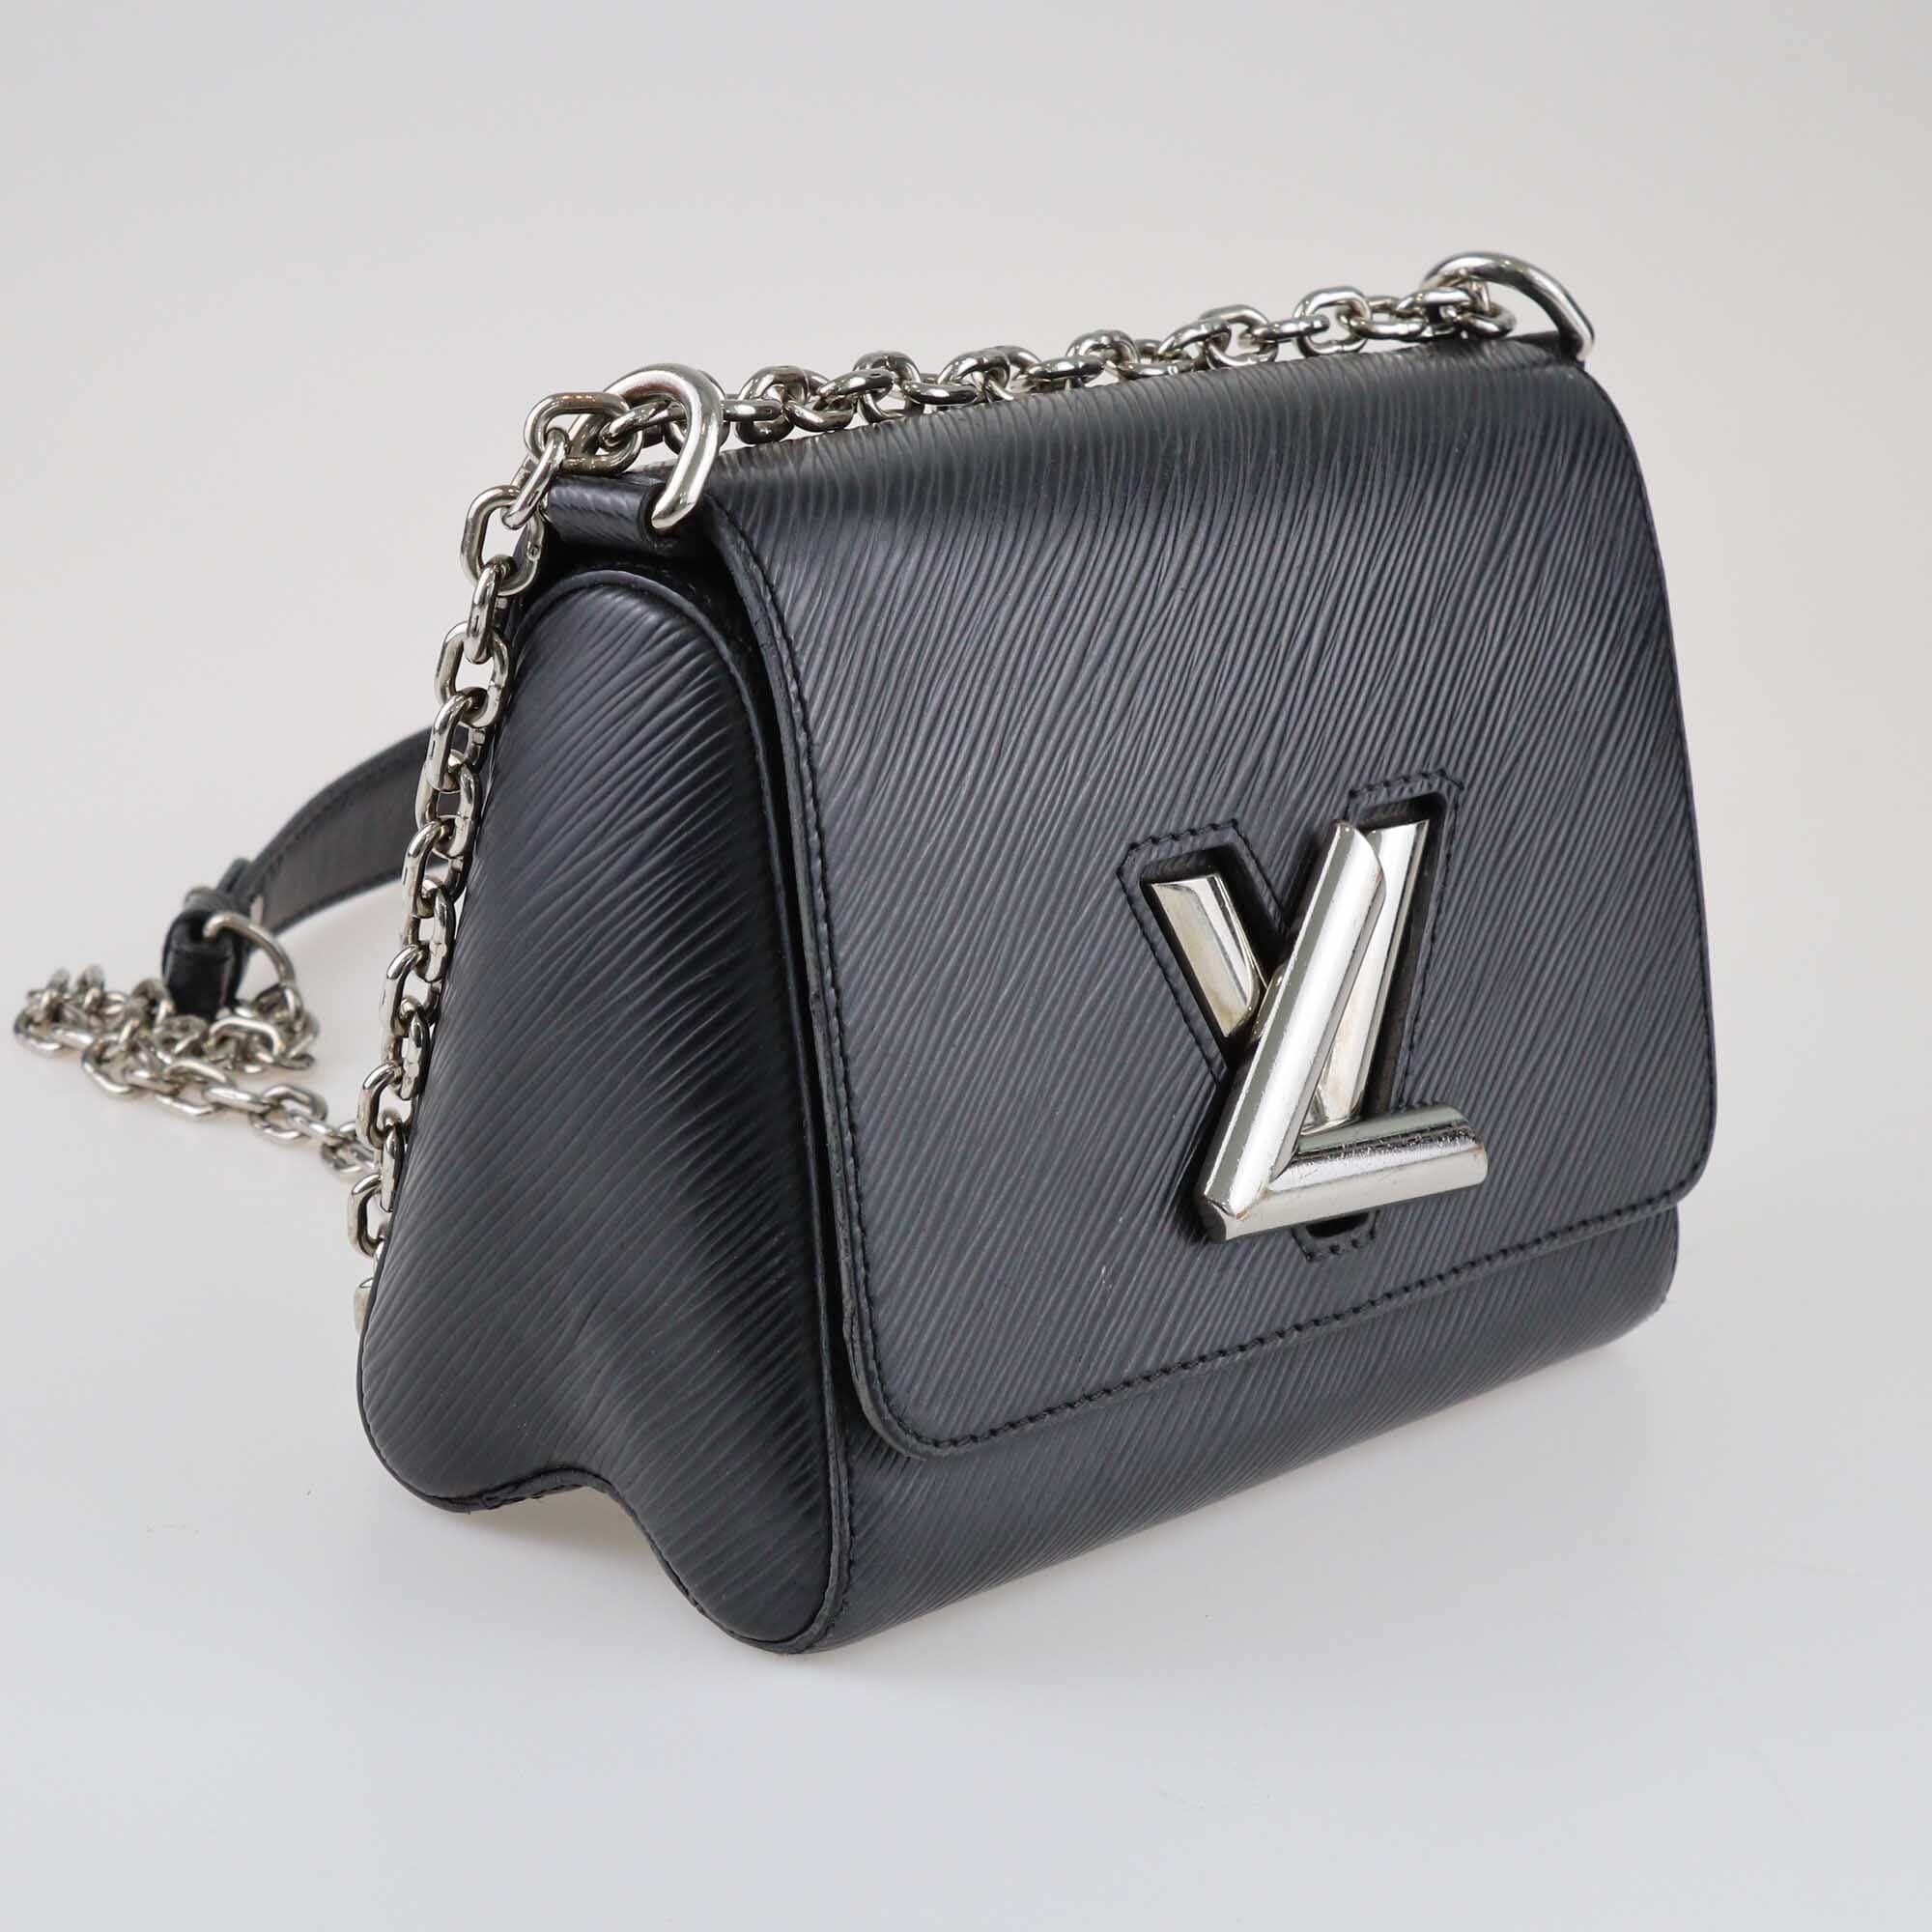 Louis Vuitton Damier Azur Neverfull MM Bag Bags Louis Vuitton 